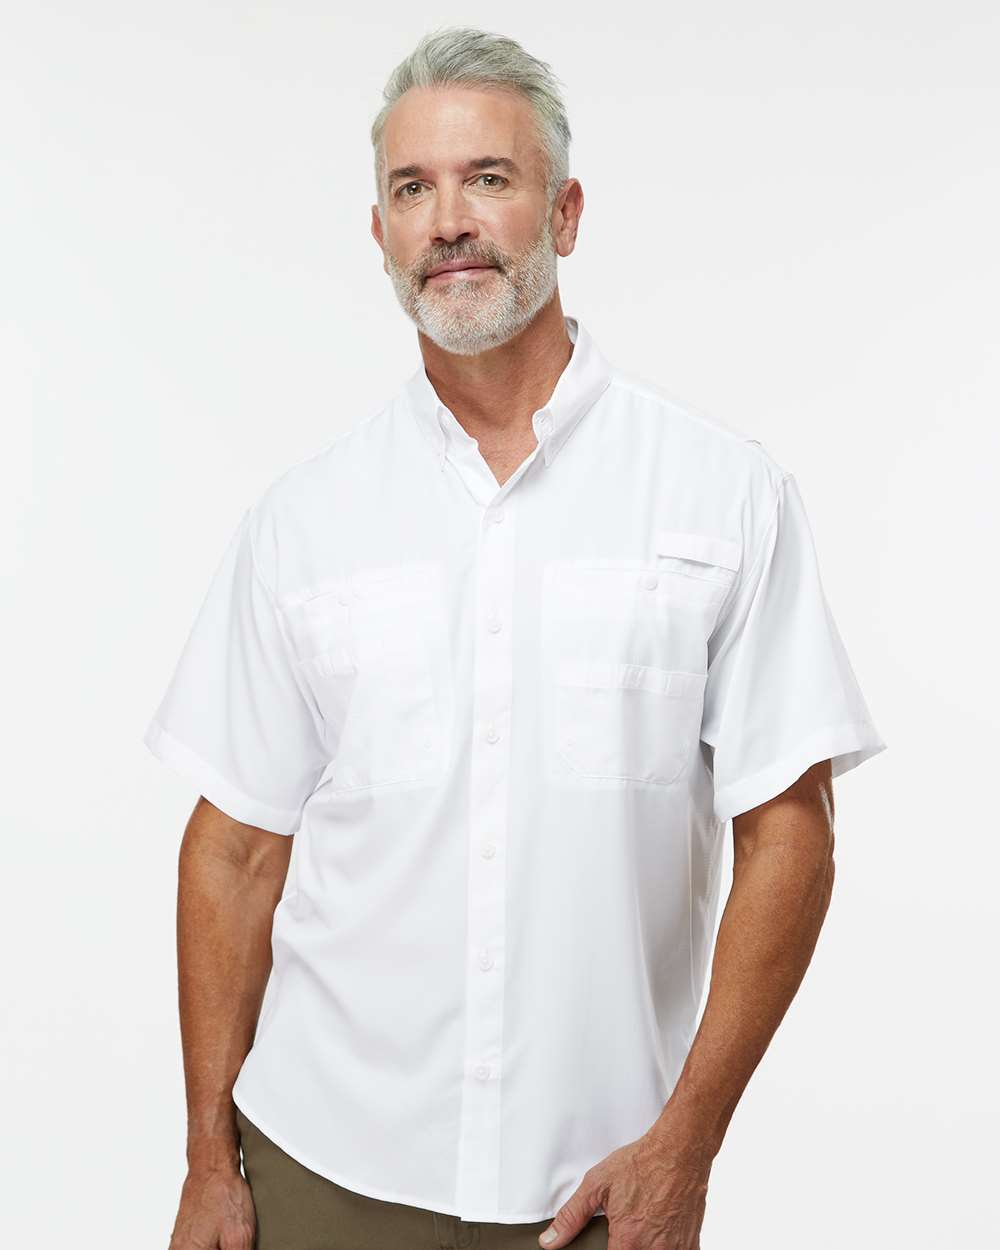 Fishing Shirt, Embroidery, Blank Shirt, Short Sleeve Fishing Shirt